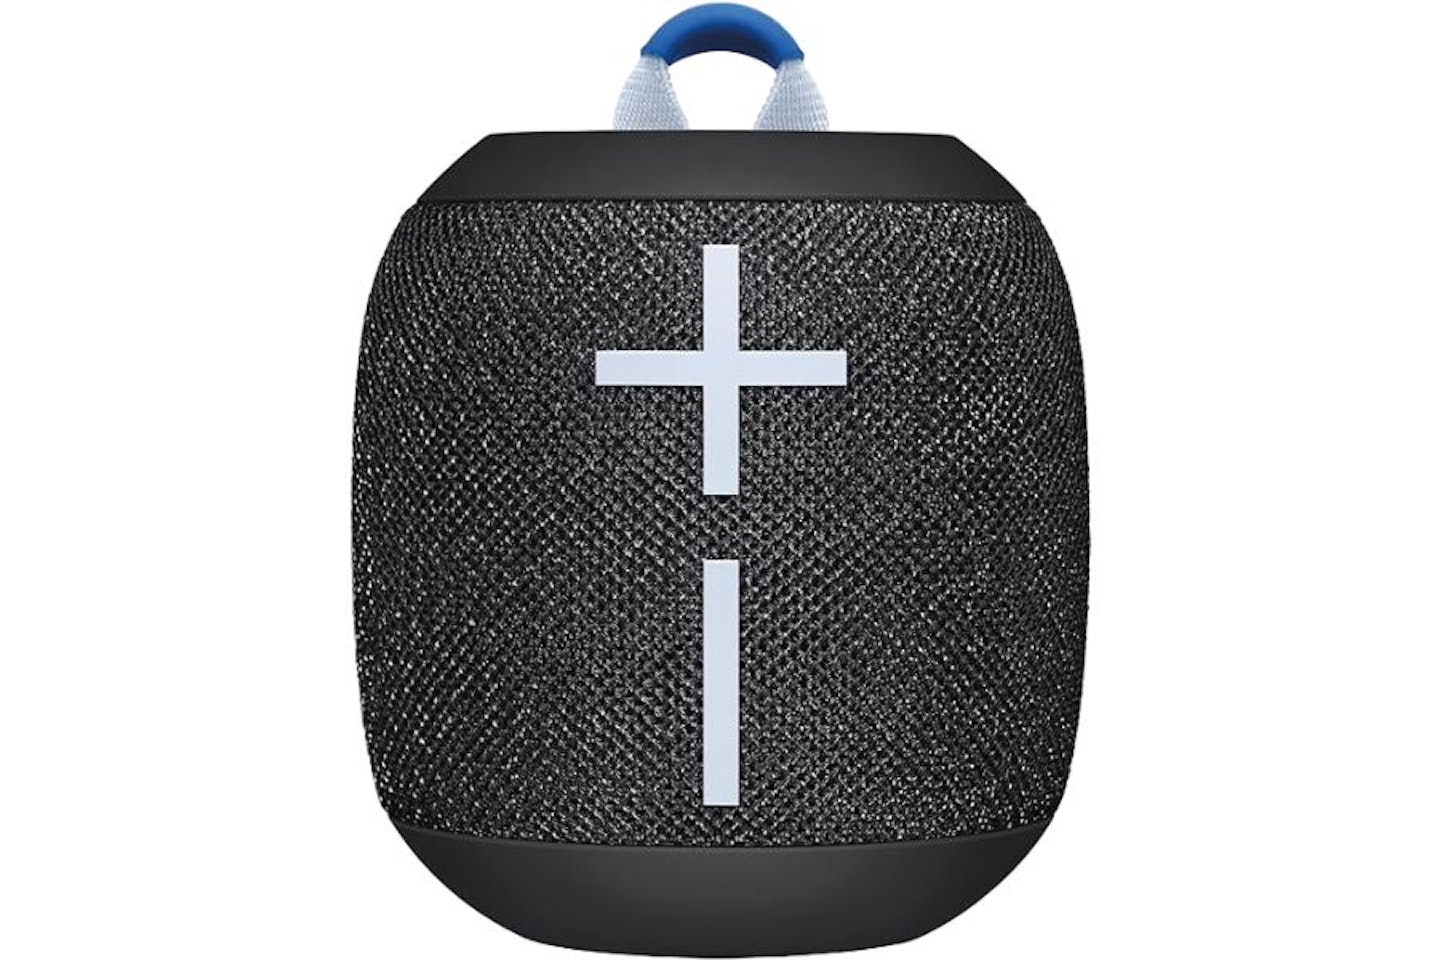 ULTIMATE EARS WONDERBOOM 3, Small Portable Wireless Bluetooth Speaker